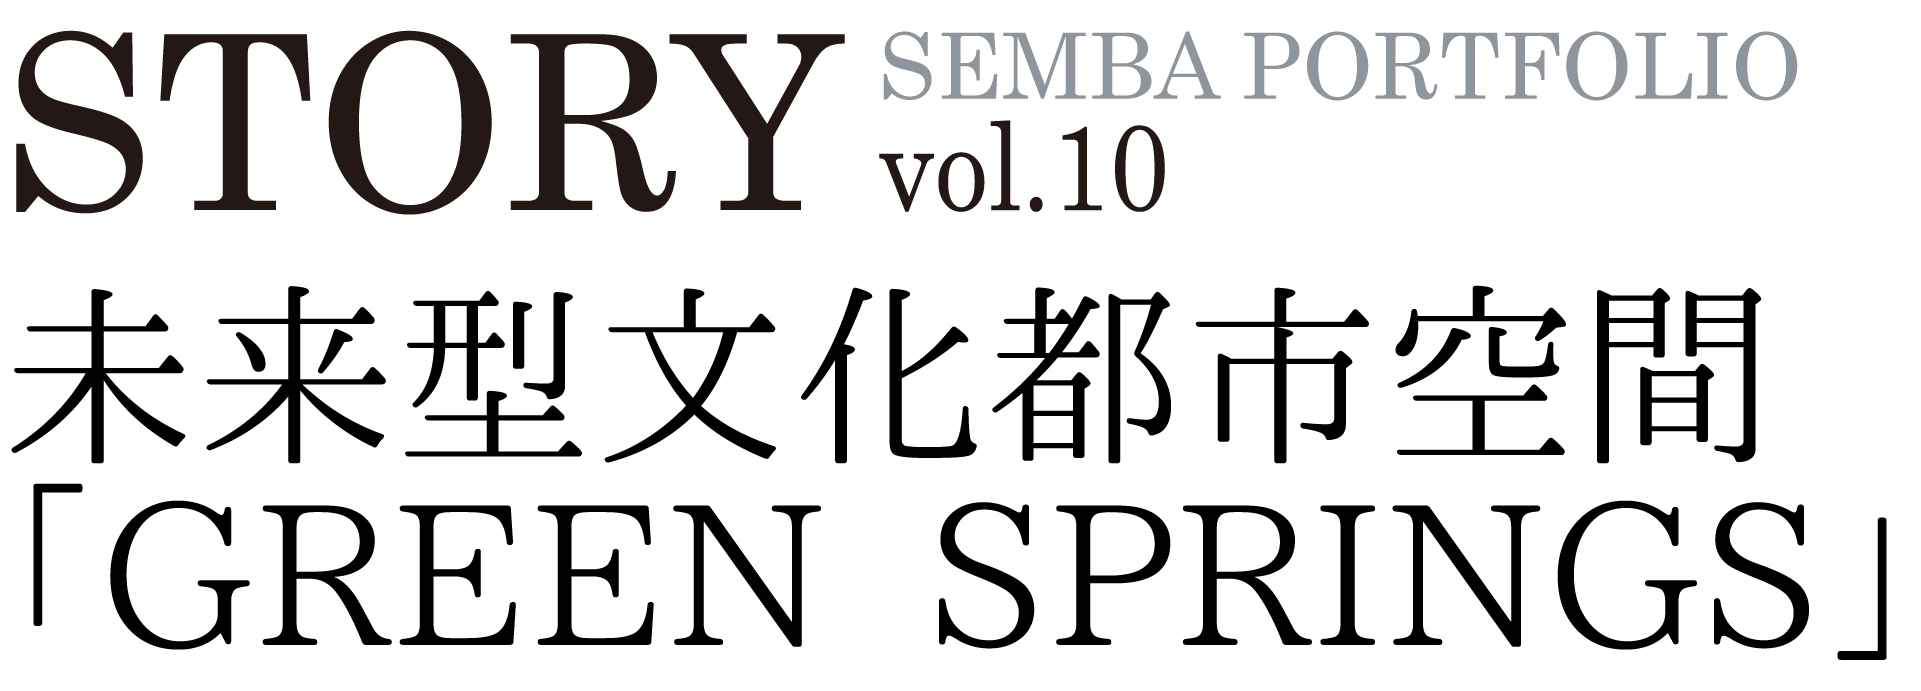 SEMBA PORTFOLIO STORY vol.10 GREEN SPRINGS